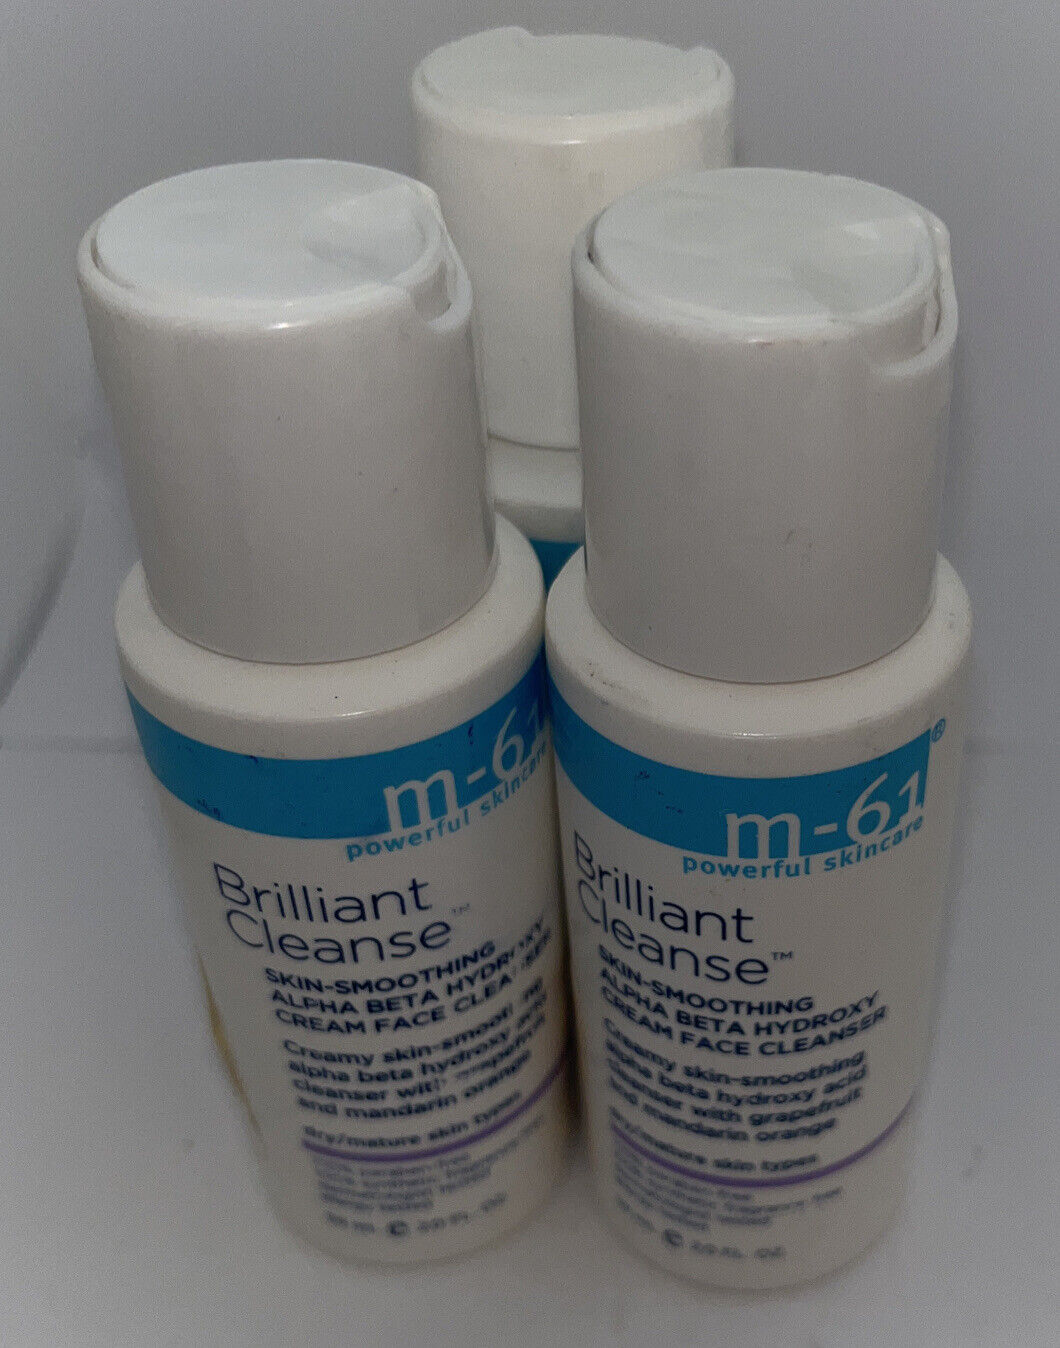 M-61 Brilliant Cleanse Skin Smoothing Alpha Beta Hydroxy Face Cream 2.0 Oz (x3)